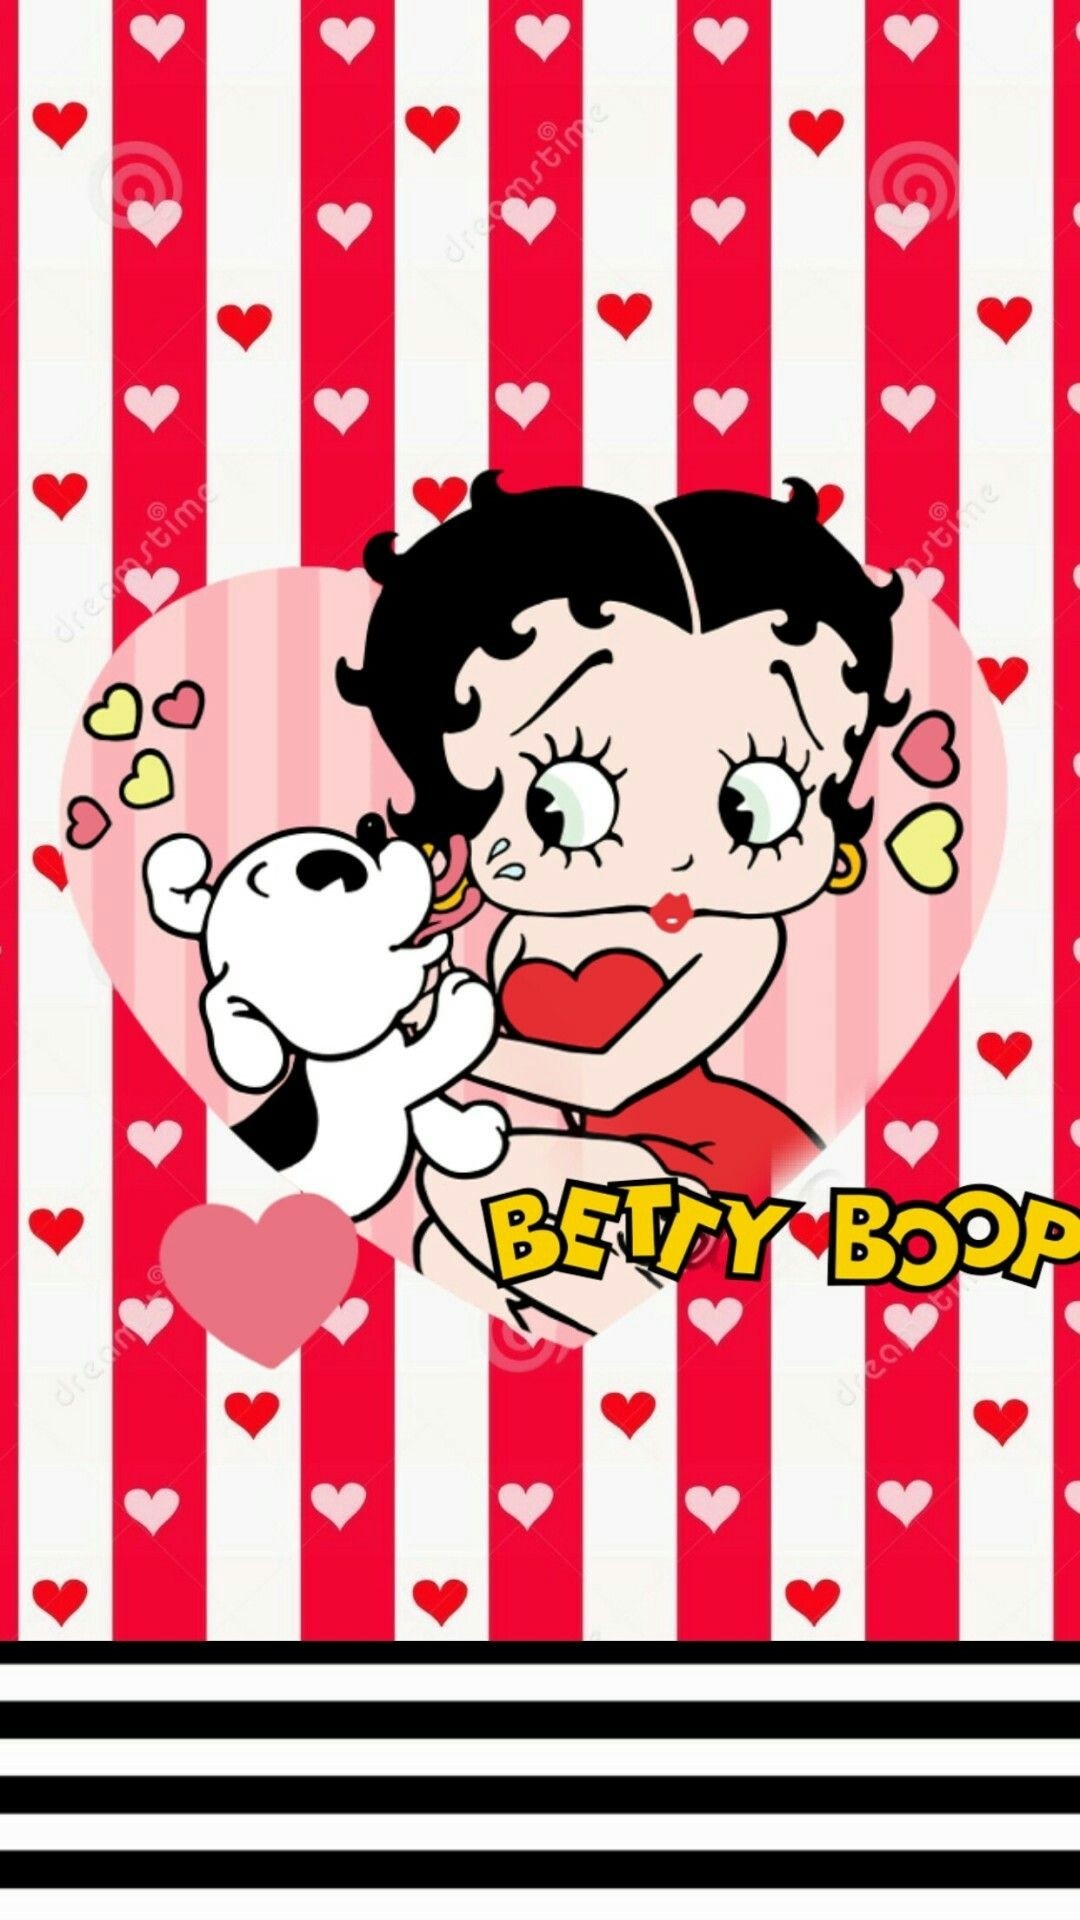 Betty Boop Christmas Wallpaper (56+